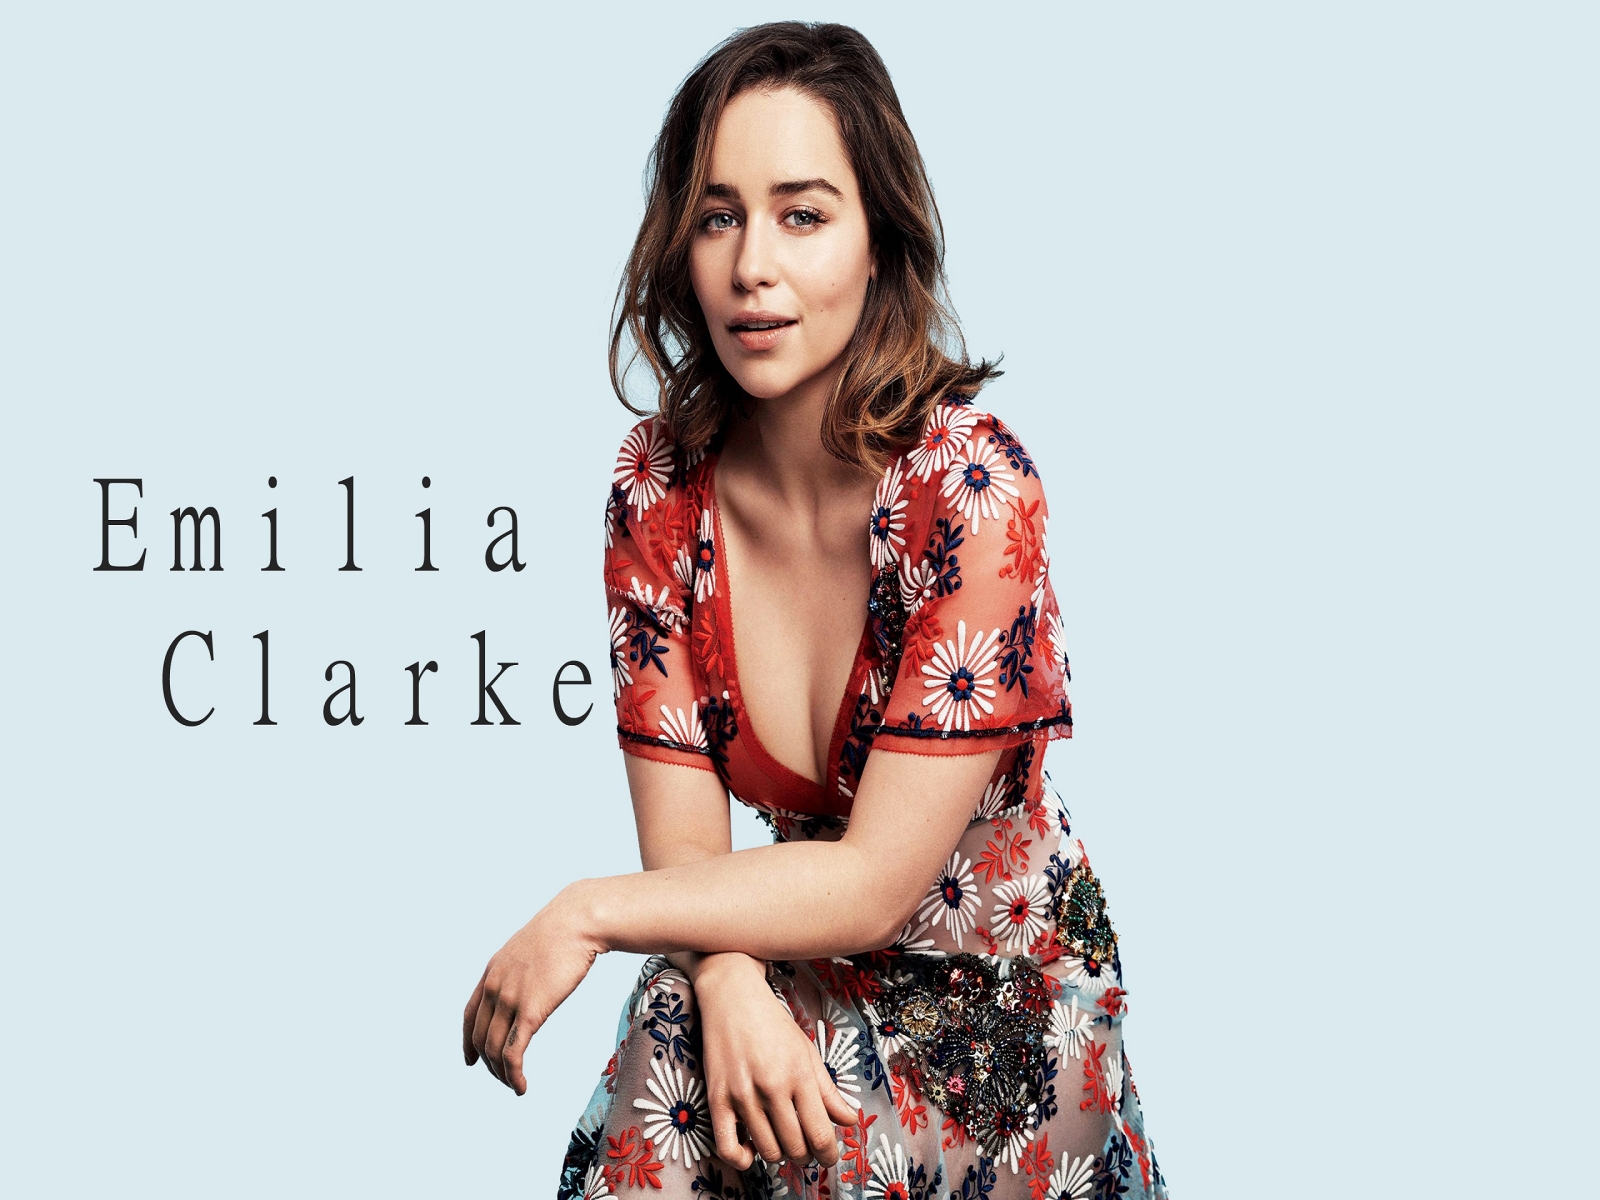 Emilia Clarke 2017 for 1600 x 1200 resolution